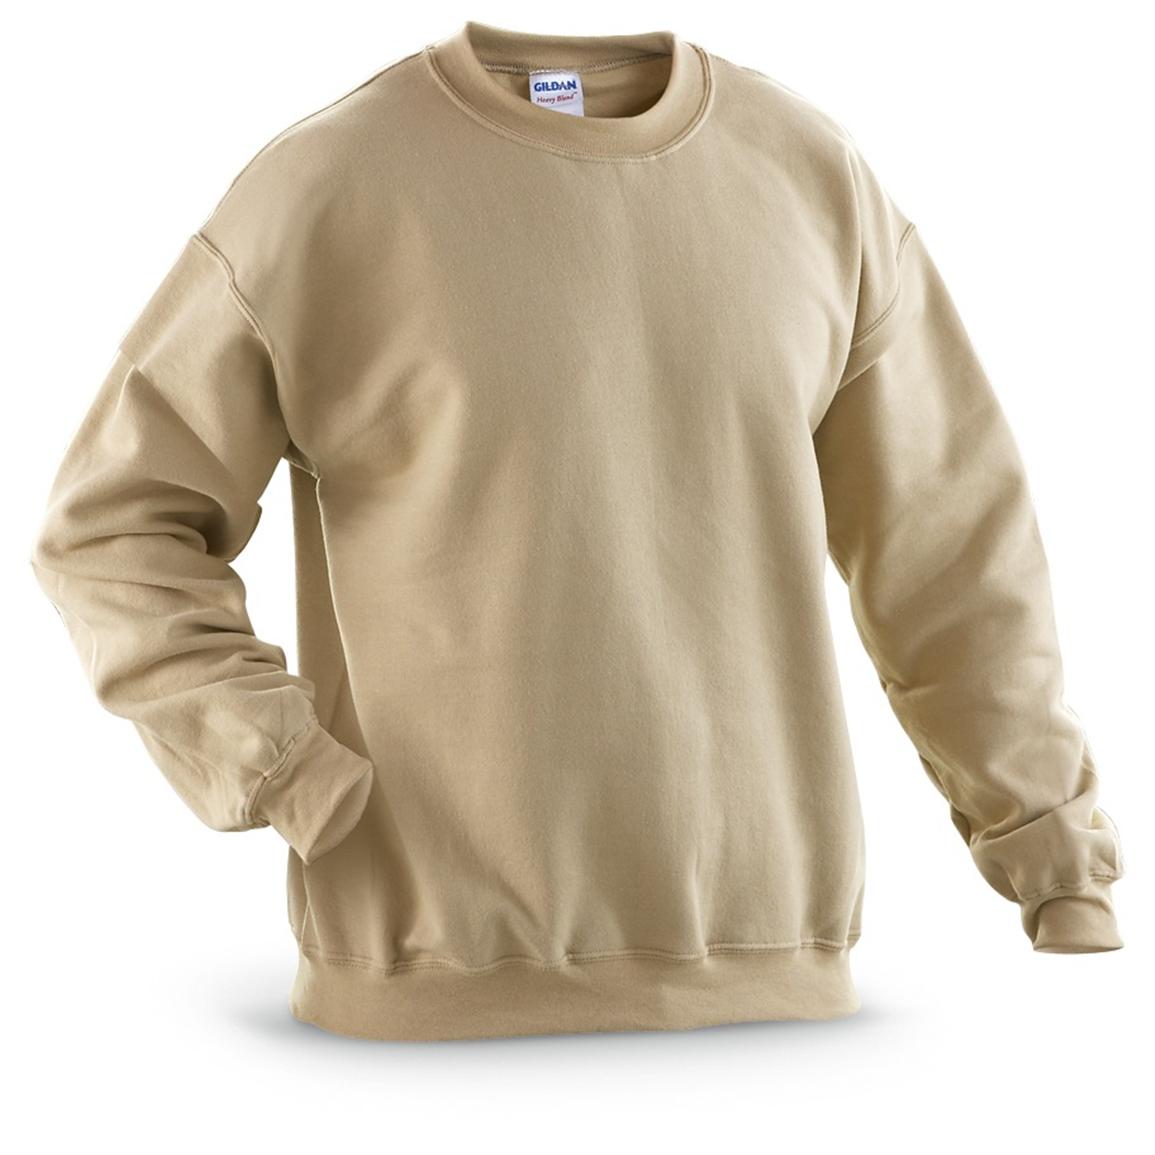 2 New U.S. Military Sweatshirts, Tan - 197504, Military Sweatshirts & Hoodies at Sportsman's Guide